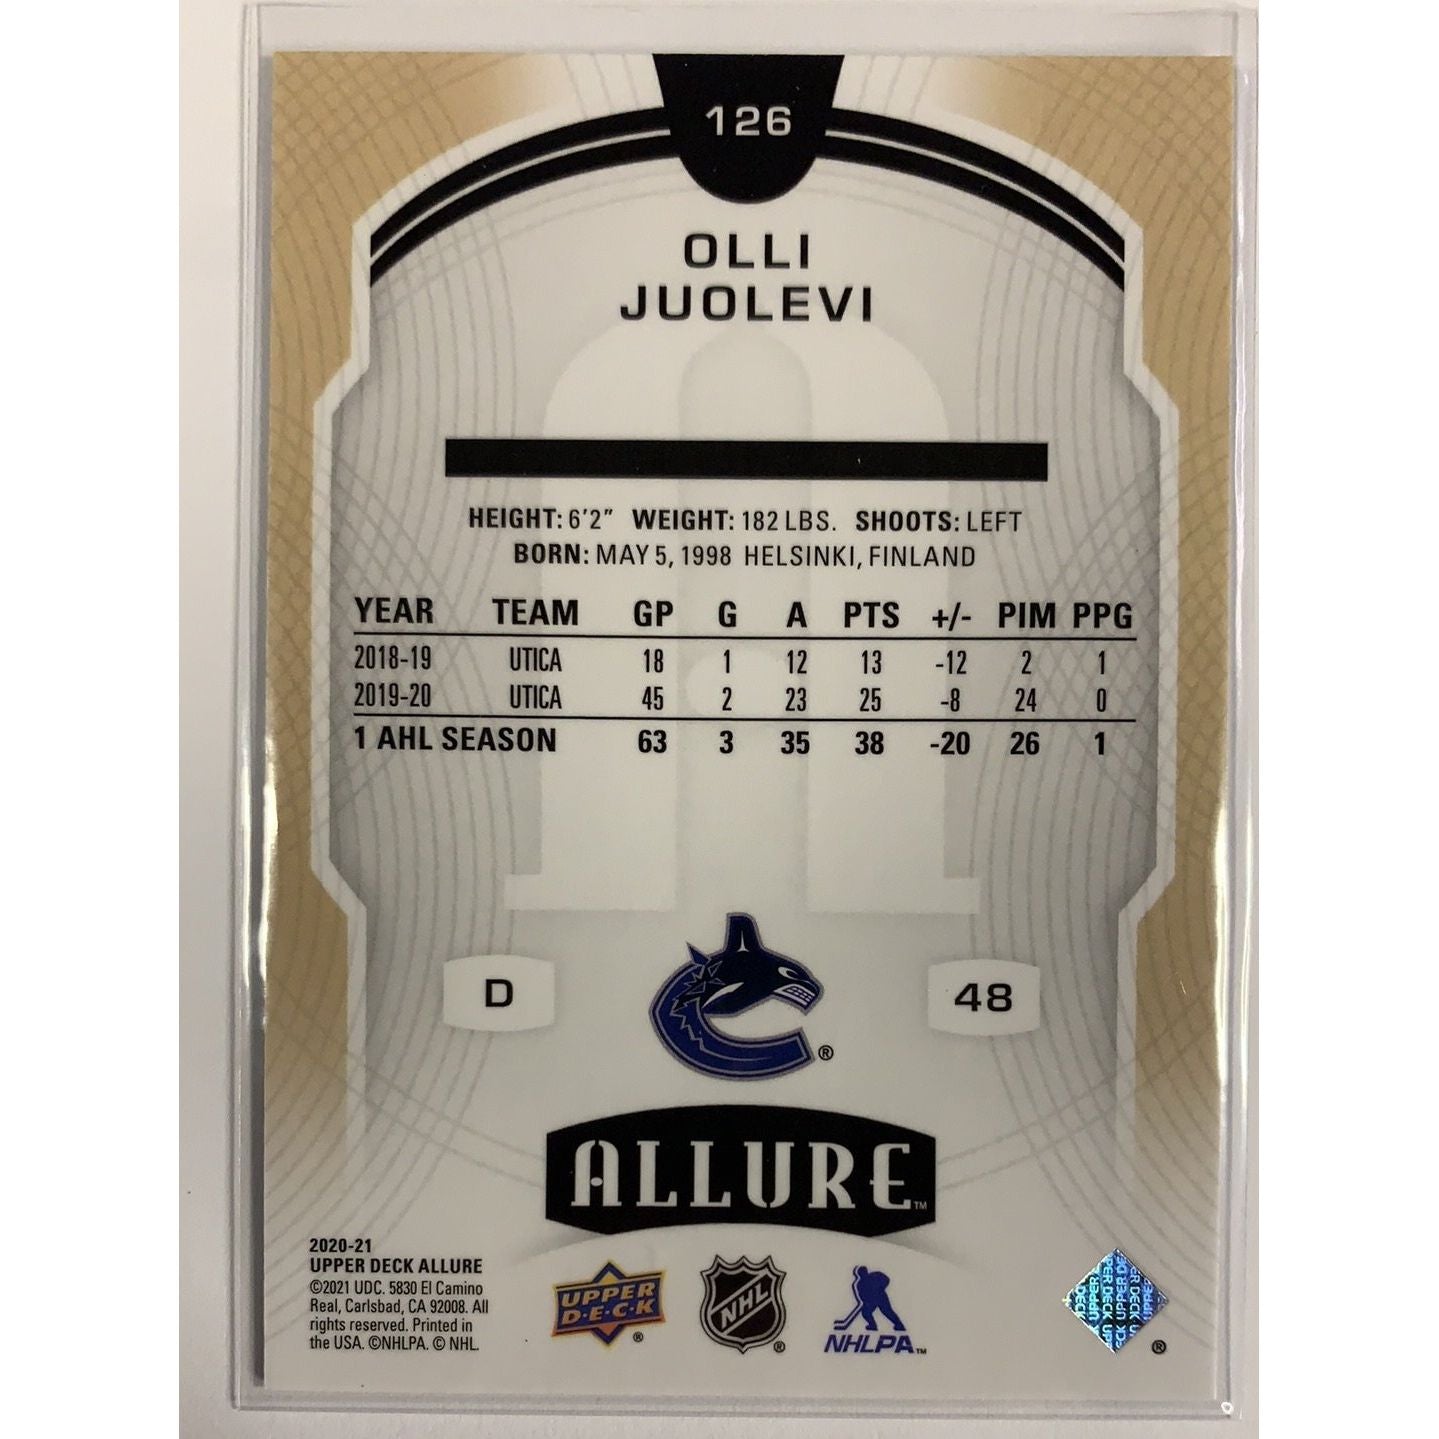  2020-21 Allure Olli Juolevi Rookie Card  Local Legends Cards & Collectibles